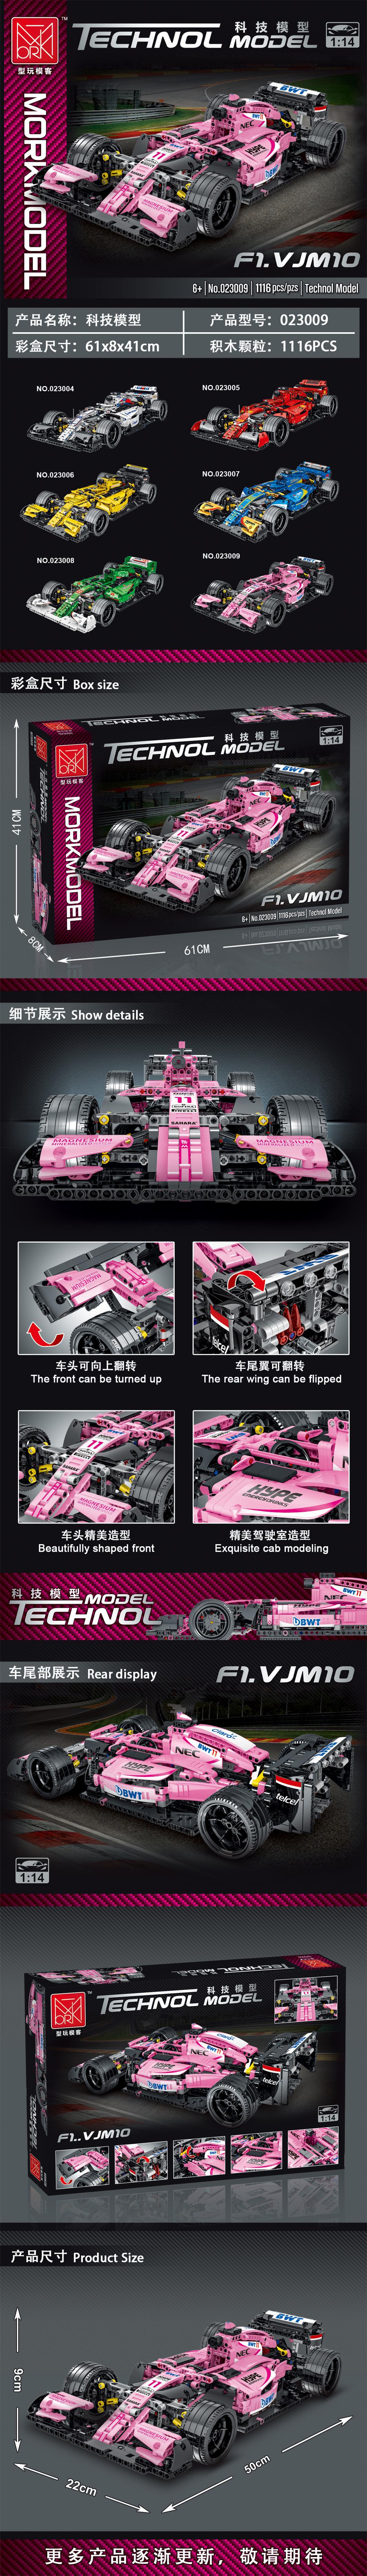 MORK 023009 Pink Force India Sports Car Model Building Bricks Toy Set